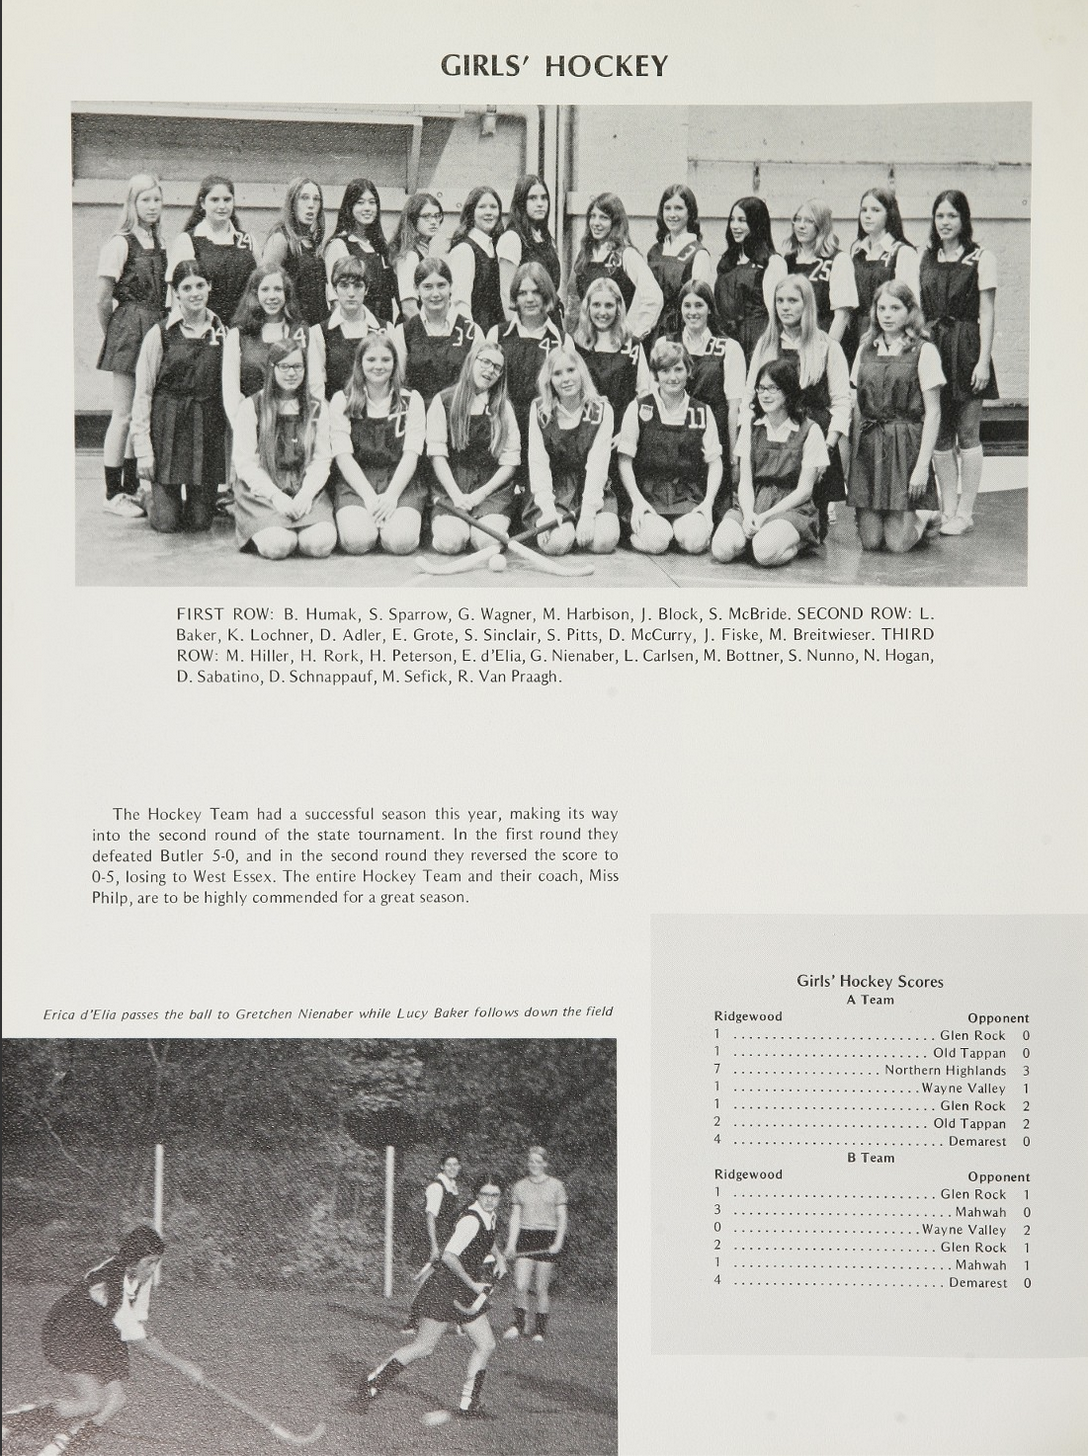 1972 Girls’ Field Hockey Team